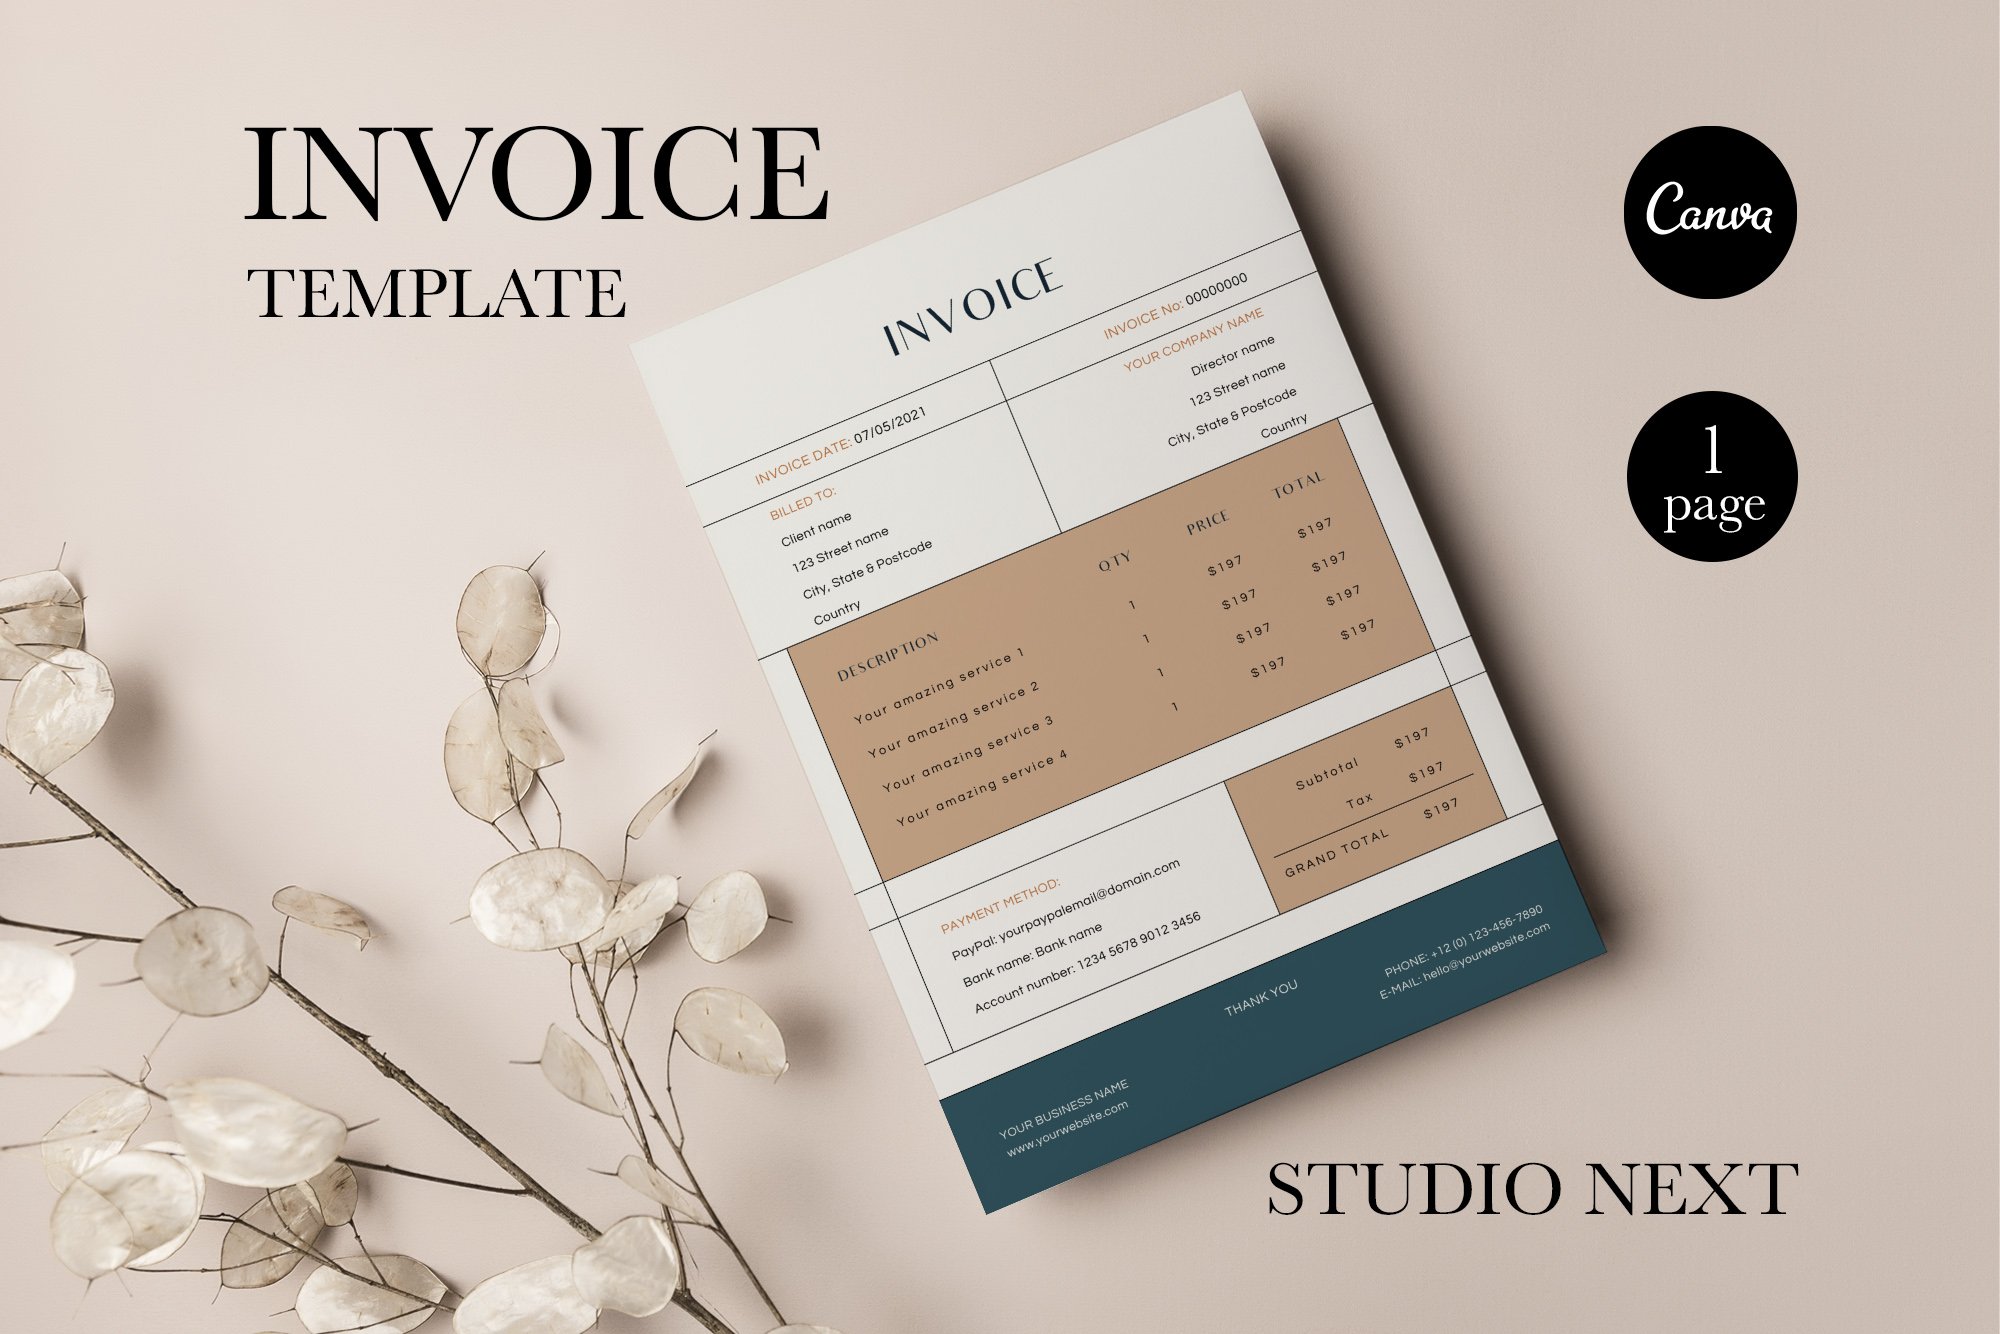 Invoice Canva Template | ABIGAIL cover image.